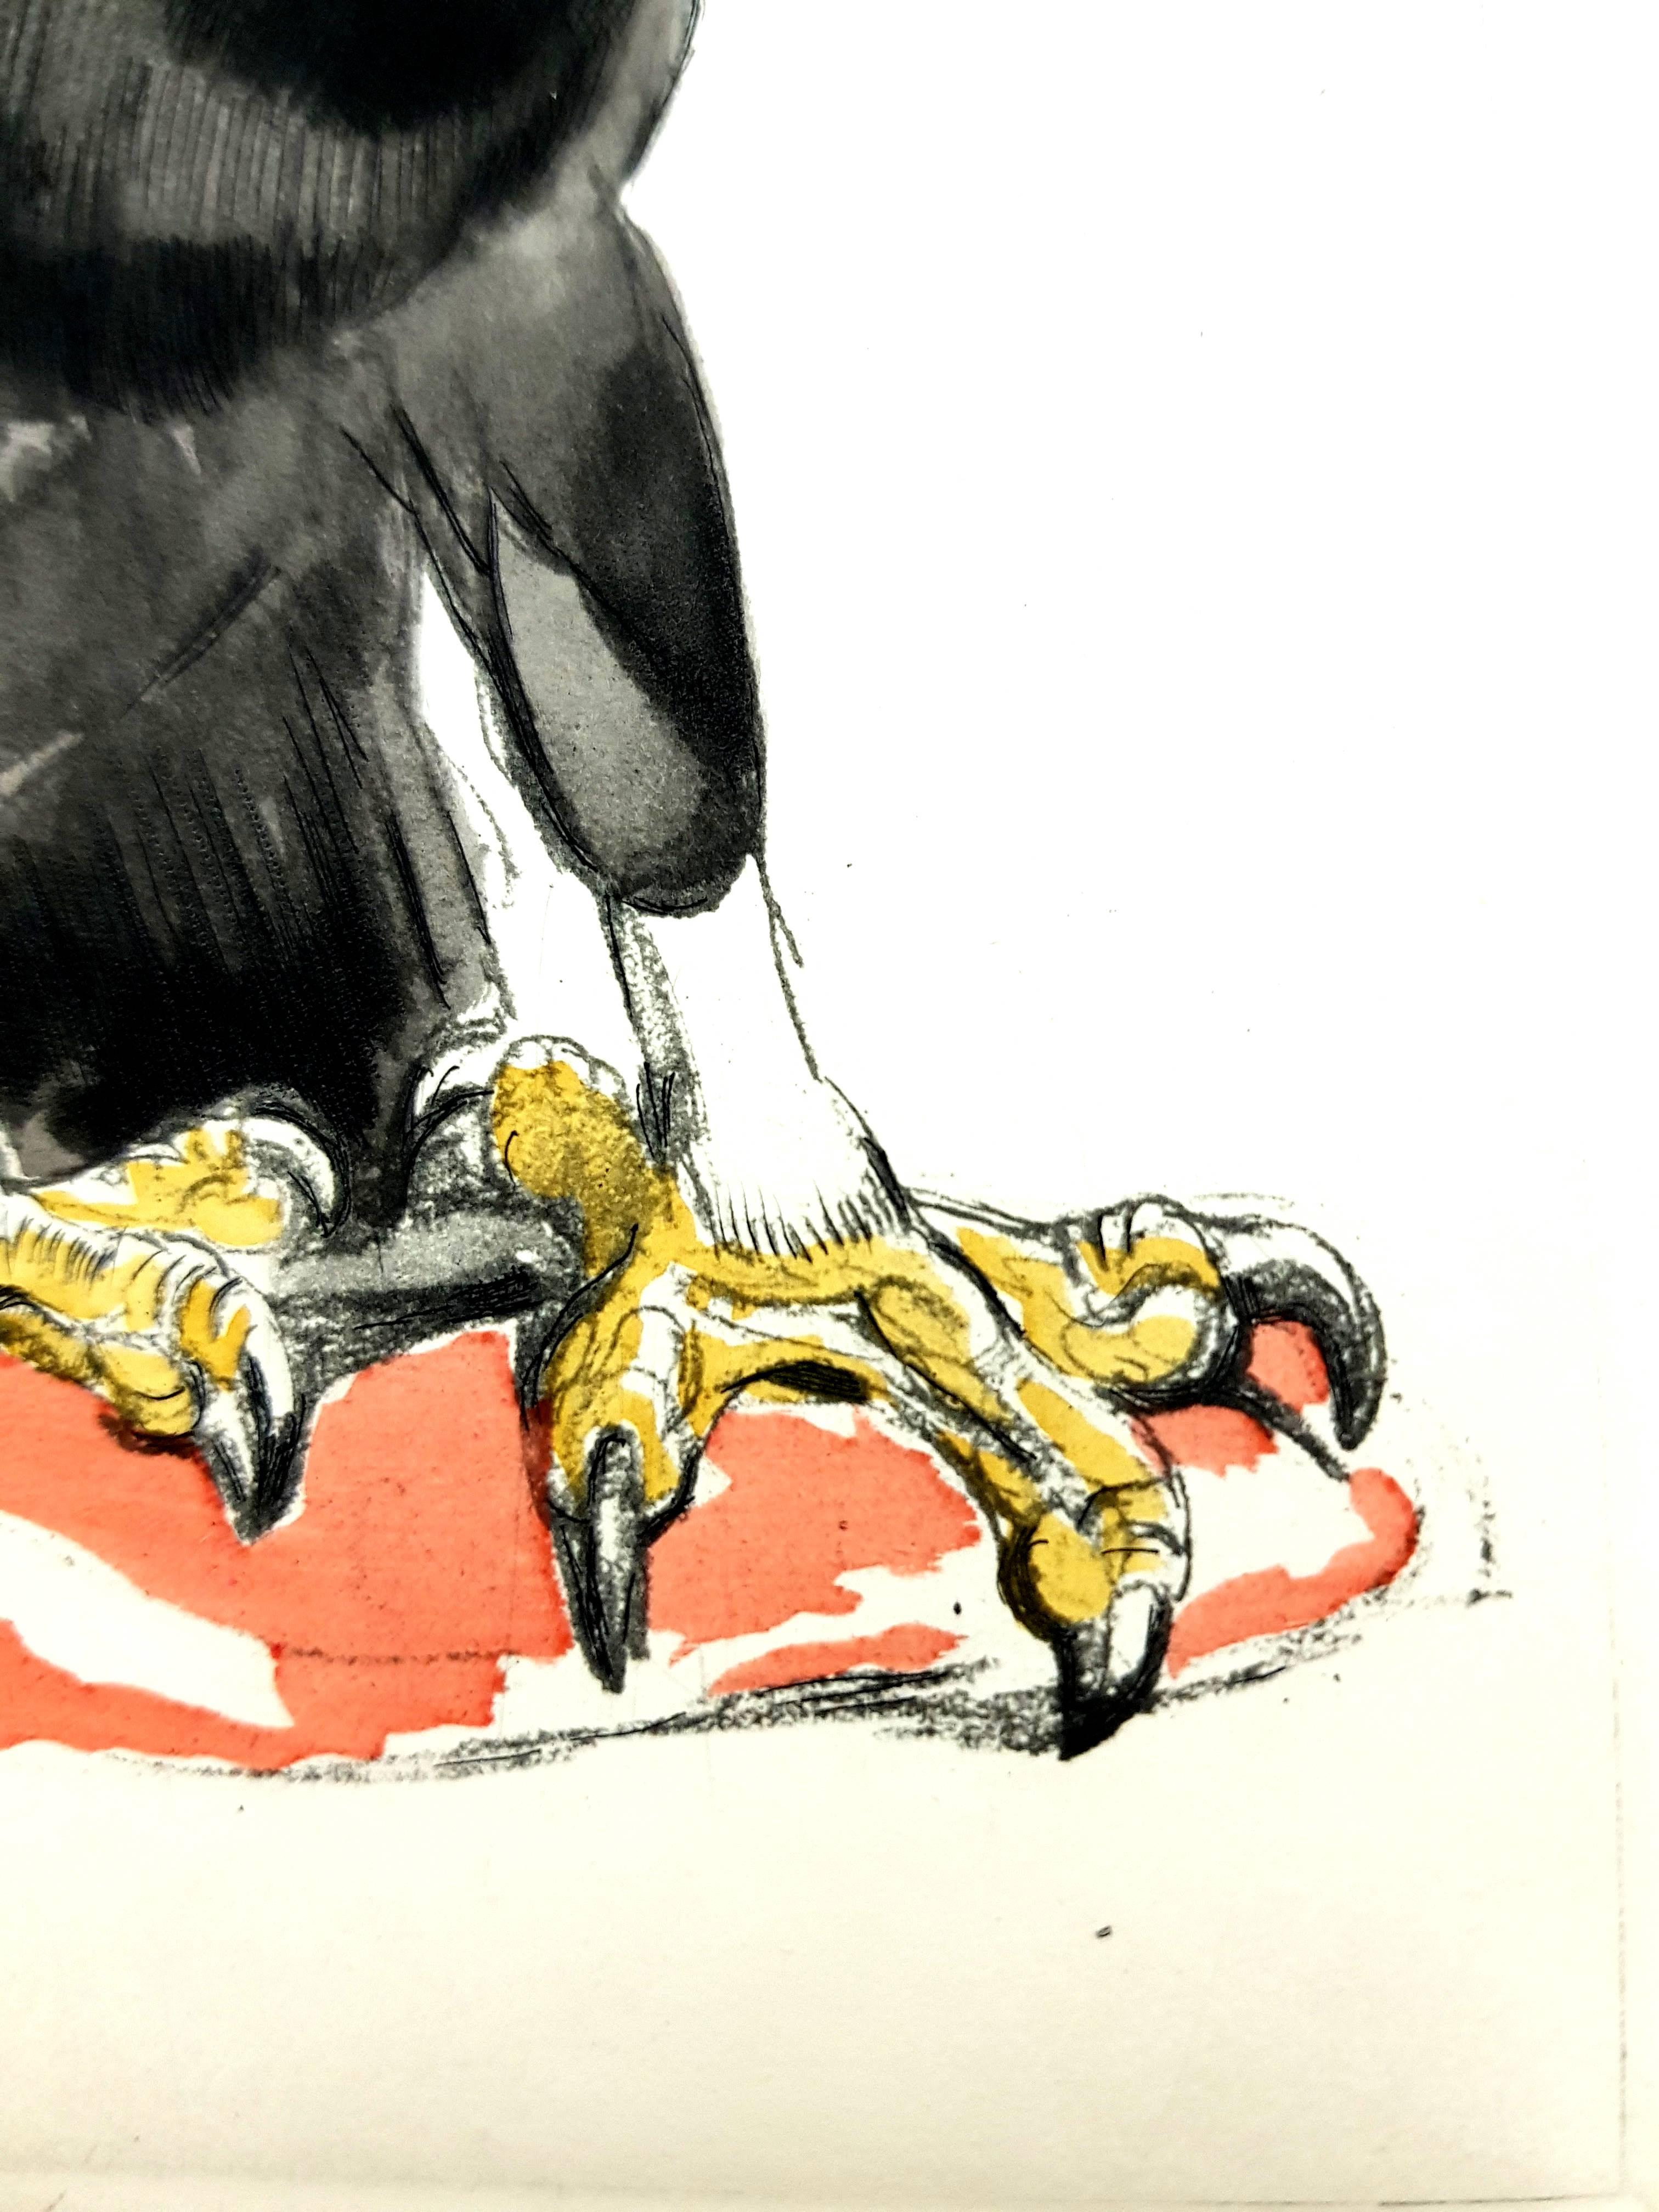 Paul Jouve - Eagle - Original Engraving
Editions Rombaldi, Paris, 1950. 
Copy on velin creme de Rives
Artwork by Paul Jouve.
Original copper engraving heightened with pochoir. 

Paul Jouve, who is considered as one of the most famous animal painters